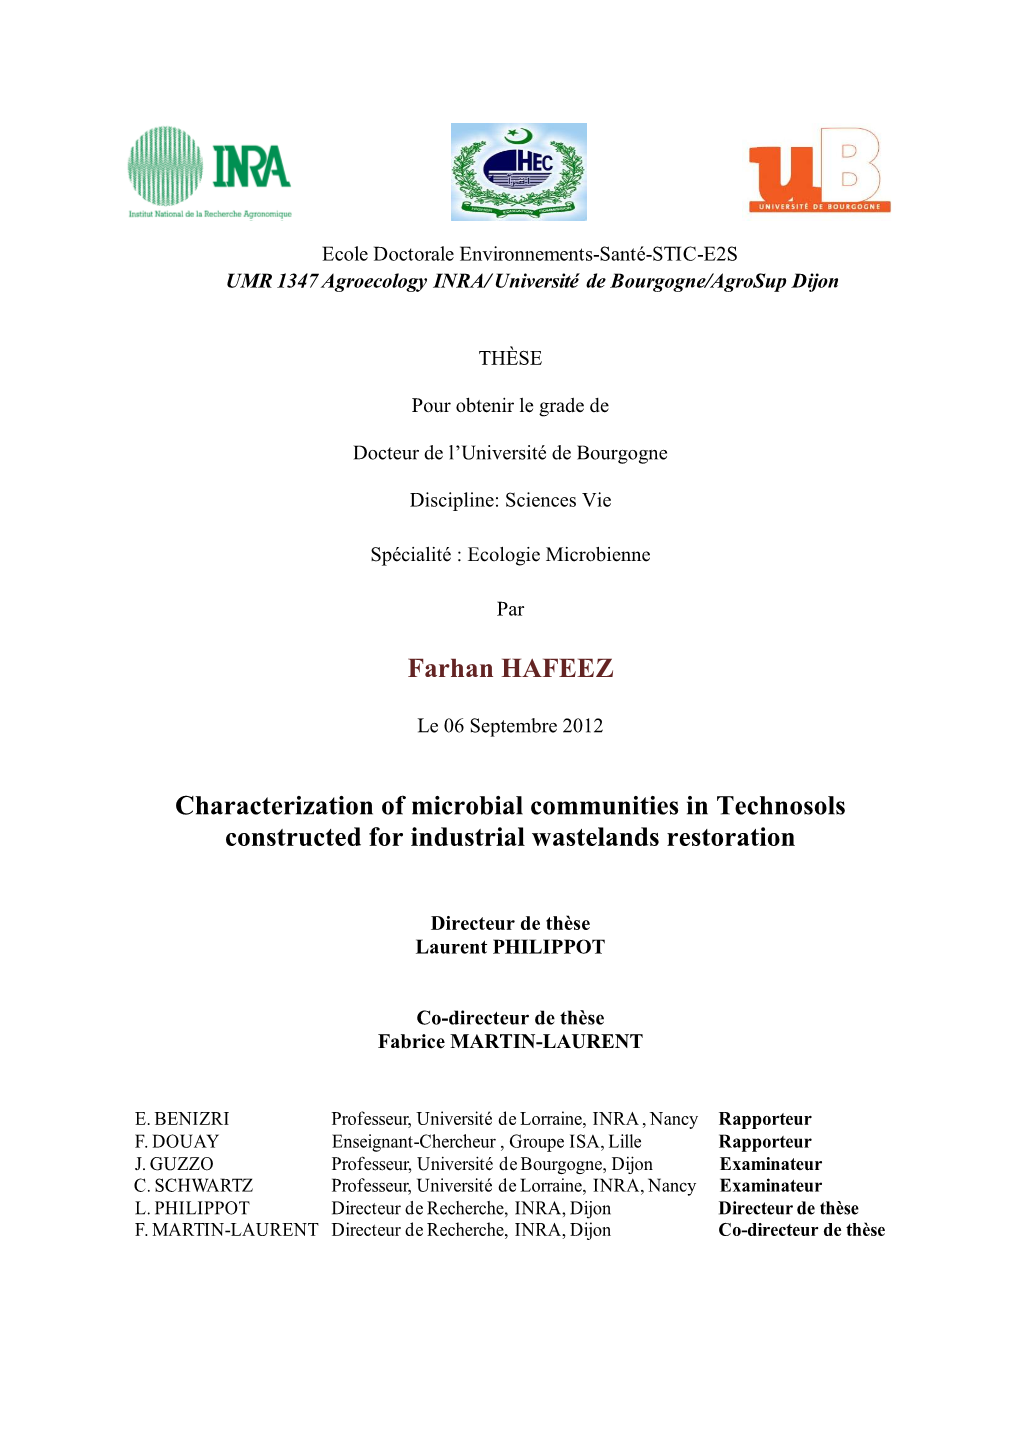 Farhan HAFEEZ Characterization of Microbial Communities In